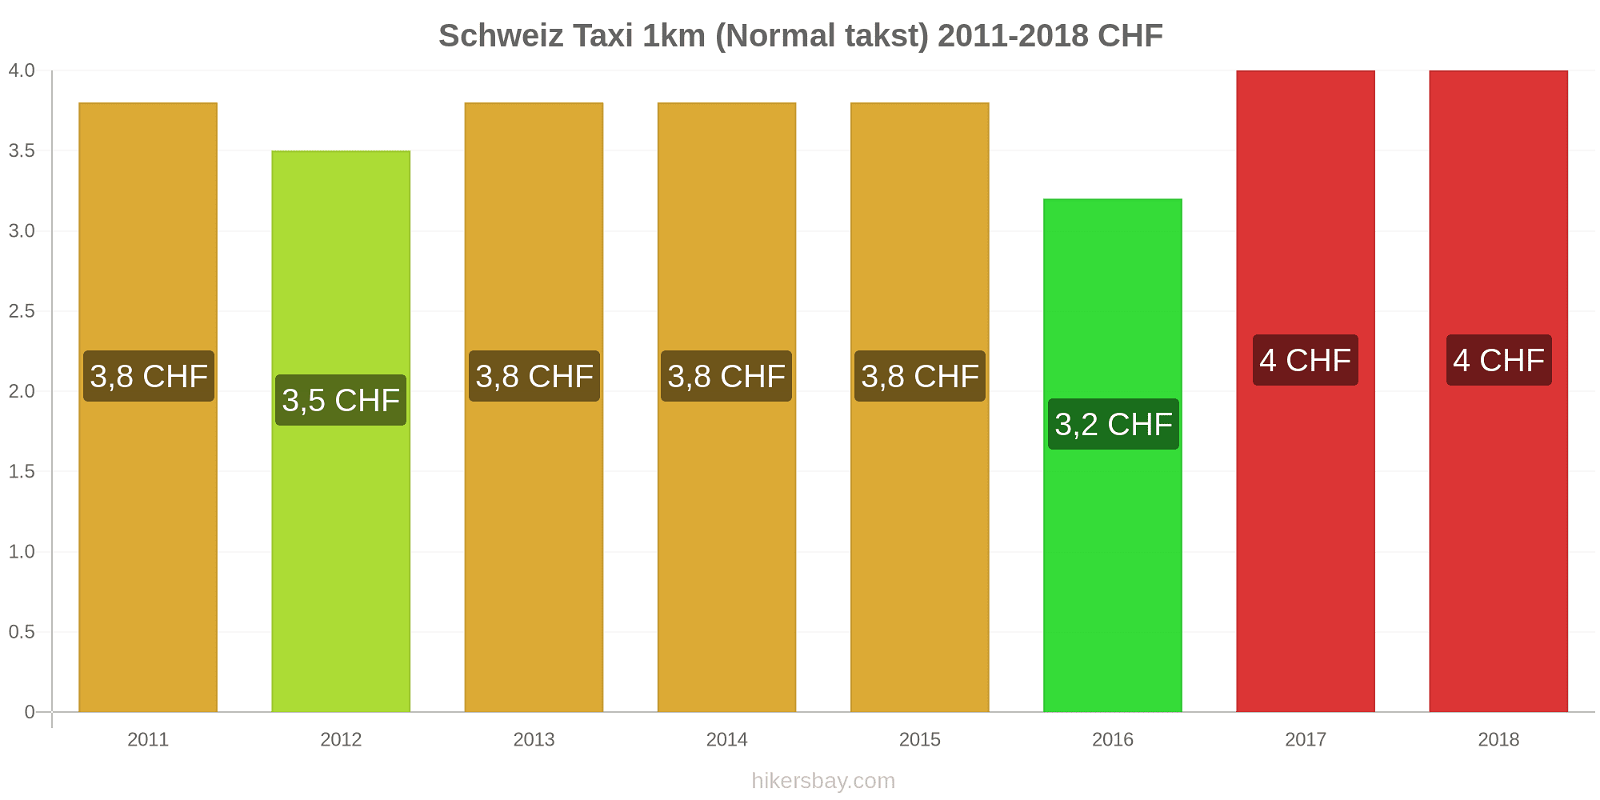 Schweiz prisændringer Taxi 1km (normal takst) hikersbay.com